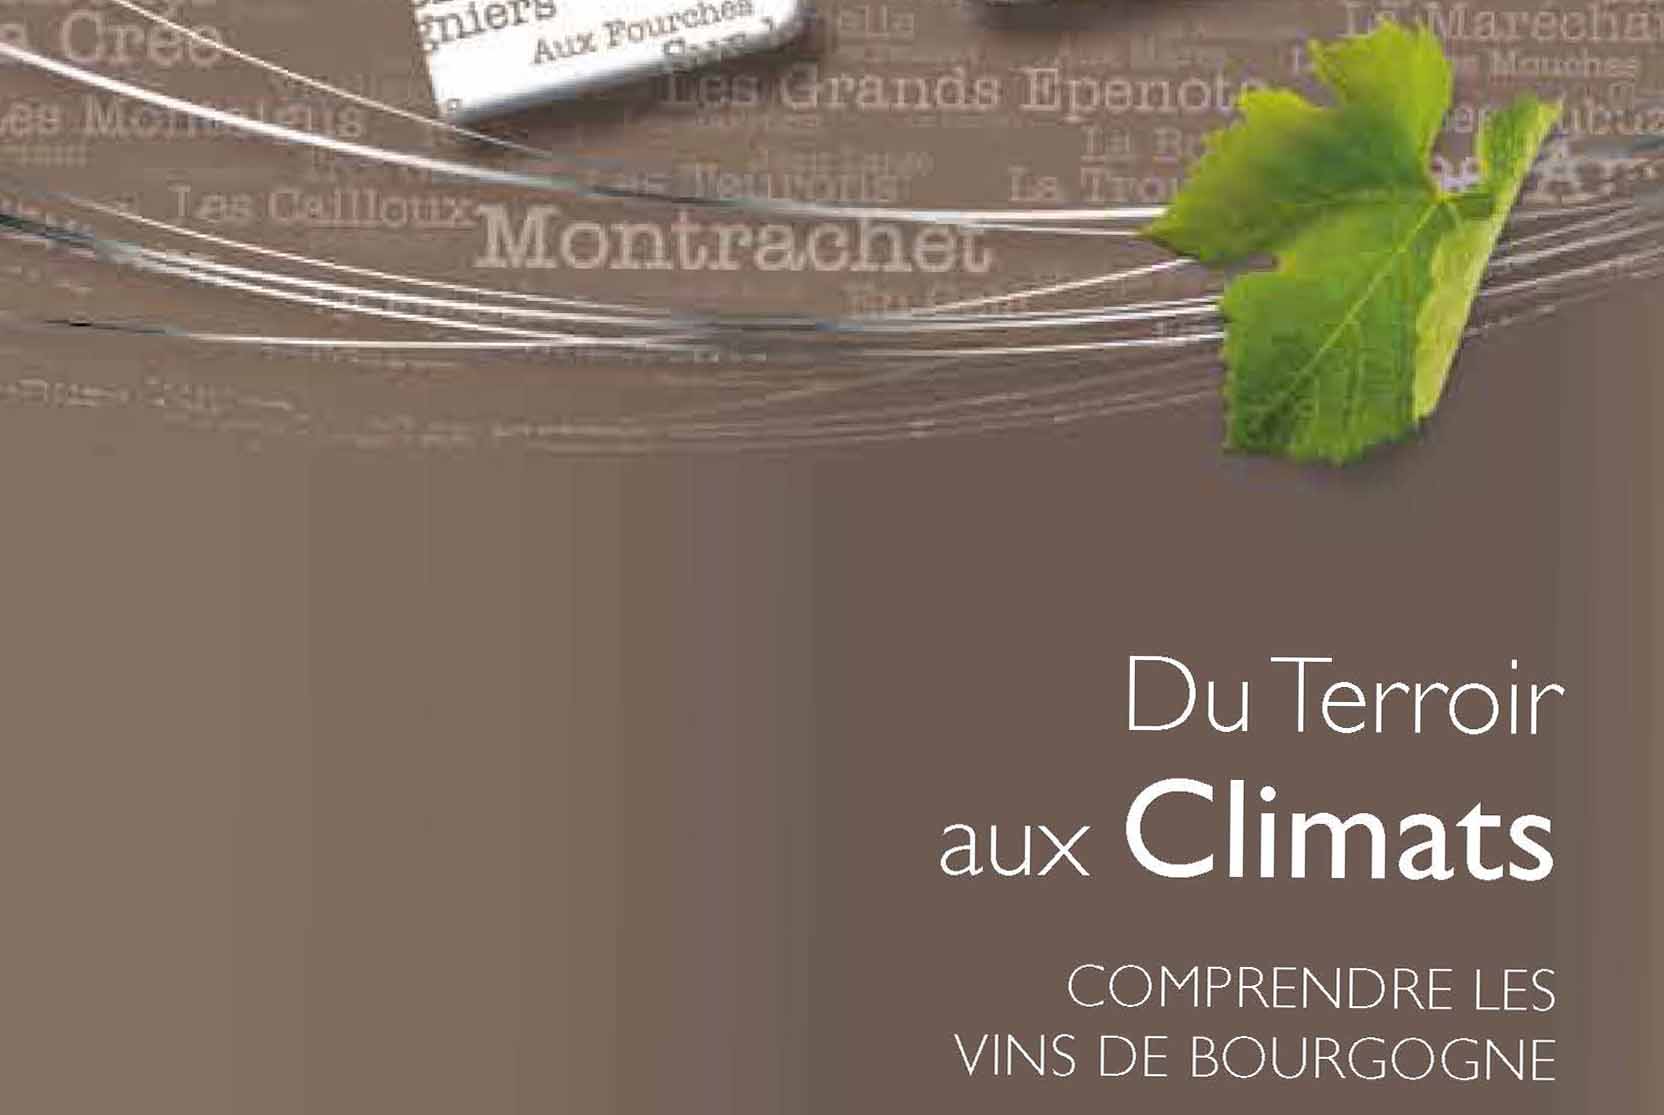 From Terroir to "Climats" - Understanding Bourgogne wines